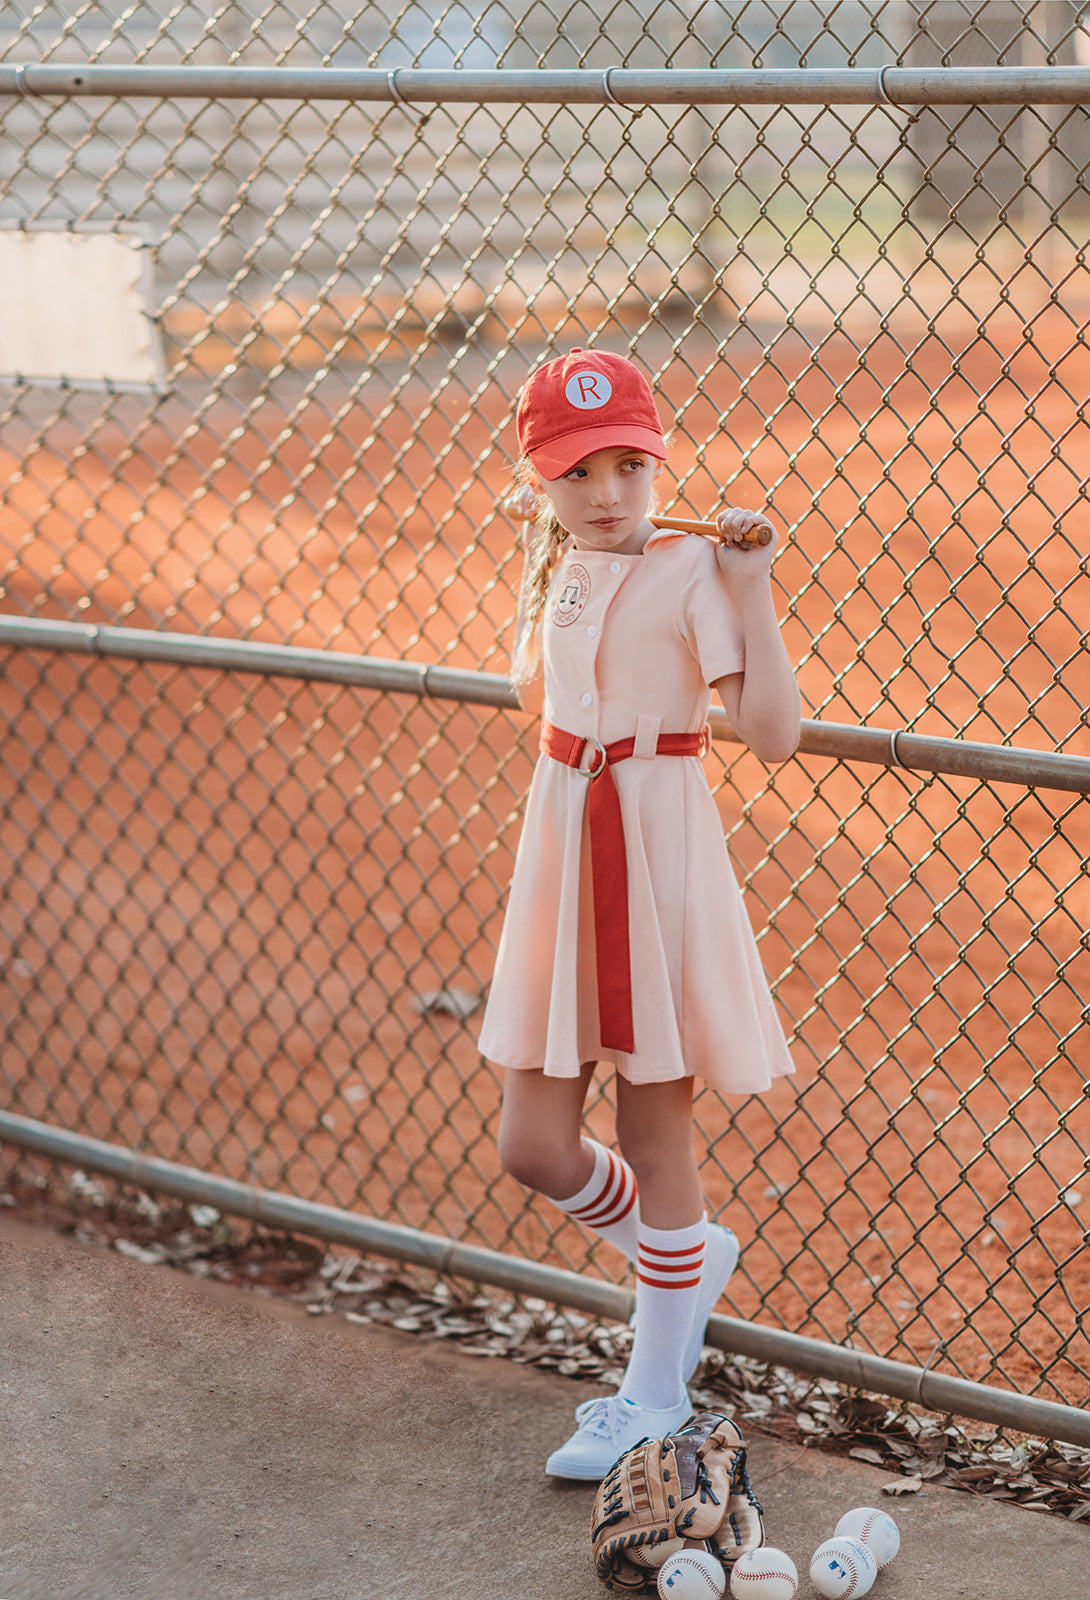 girls baseball uniform